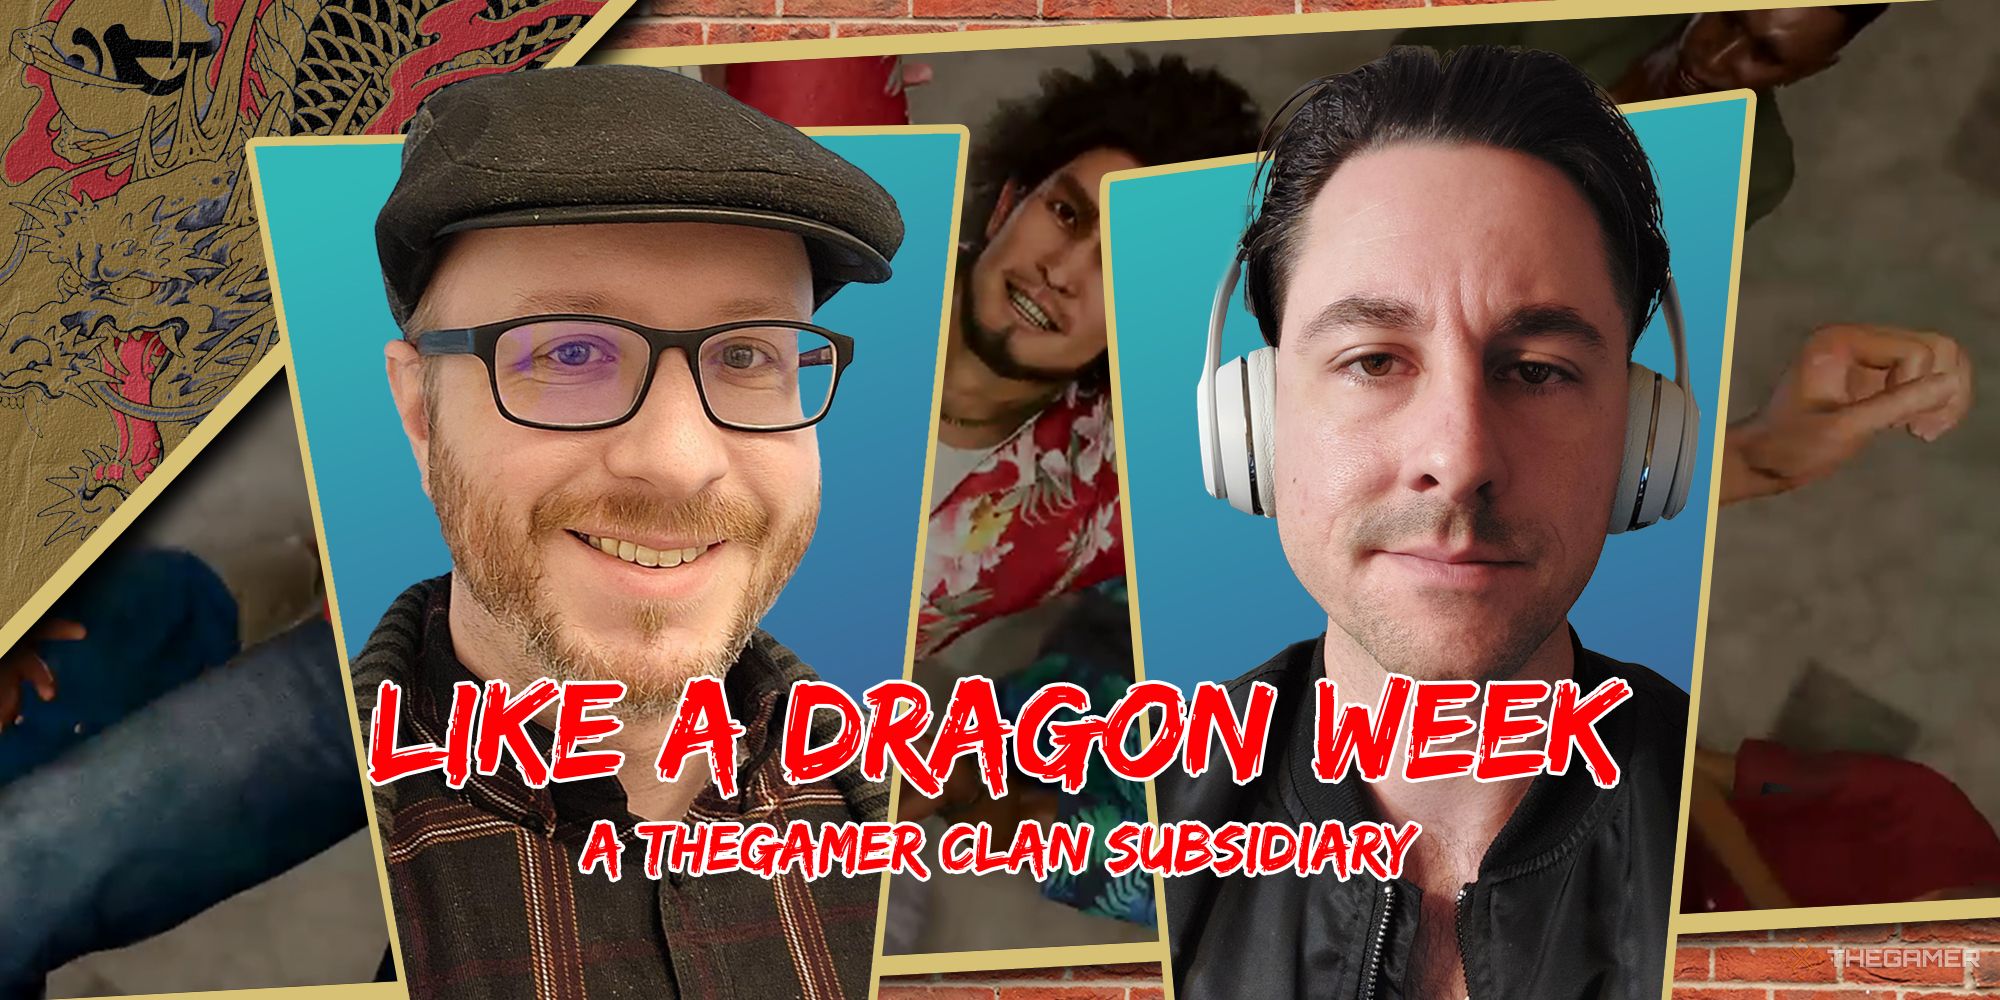 Sega lead editor Josh Malone and senior translator Dan Sunstrum against a background of Kasuga and the Like a Dragon Week text overlaid on top.